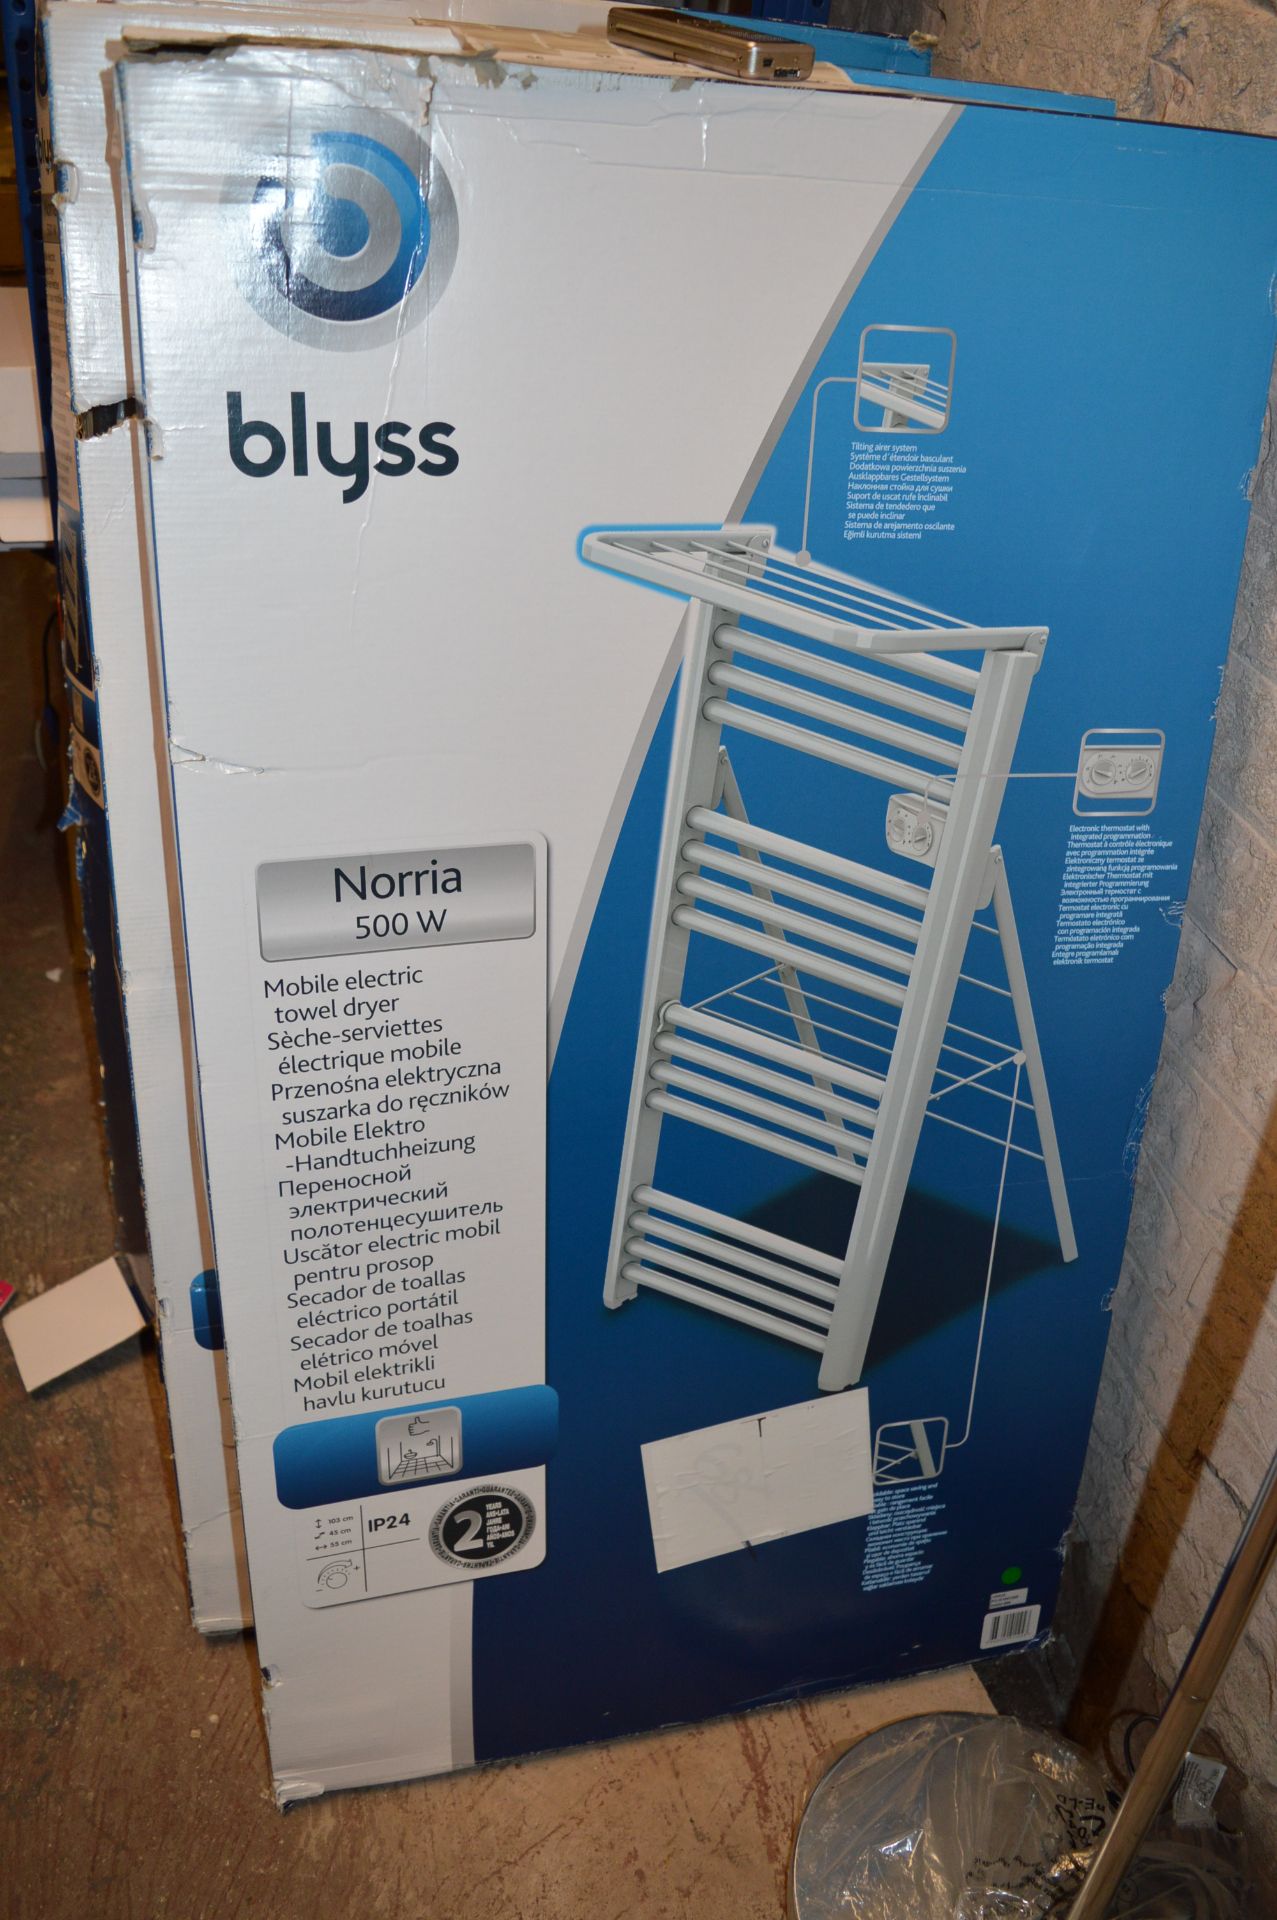 *Blyss Norris 500w Mobile Electric Towel Dryer